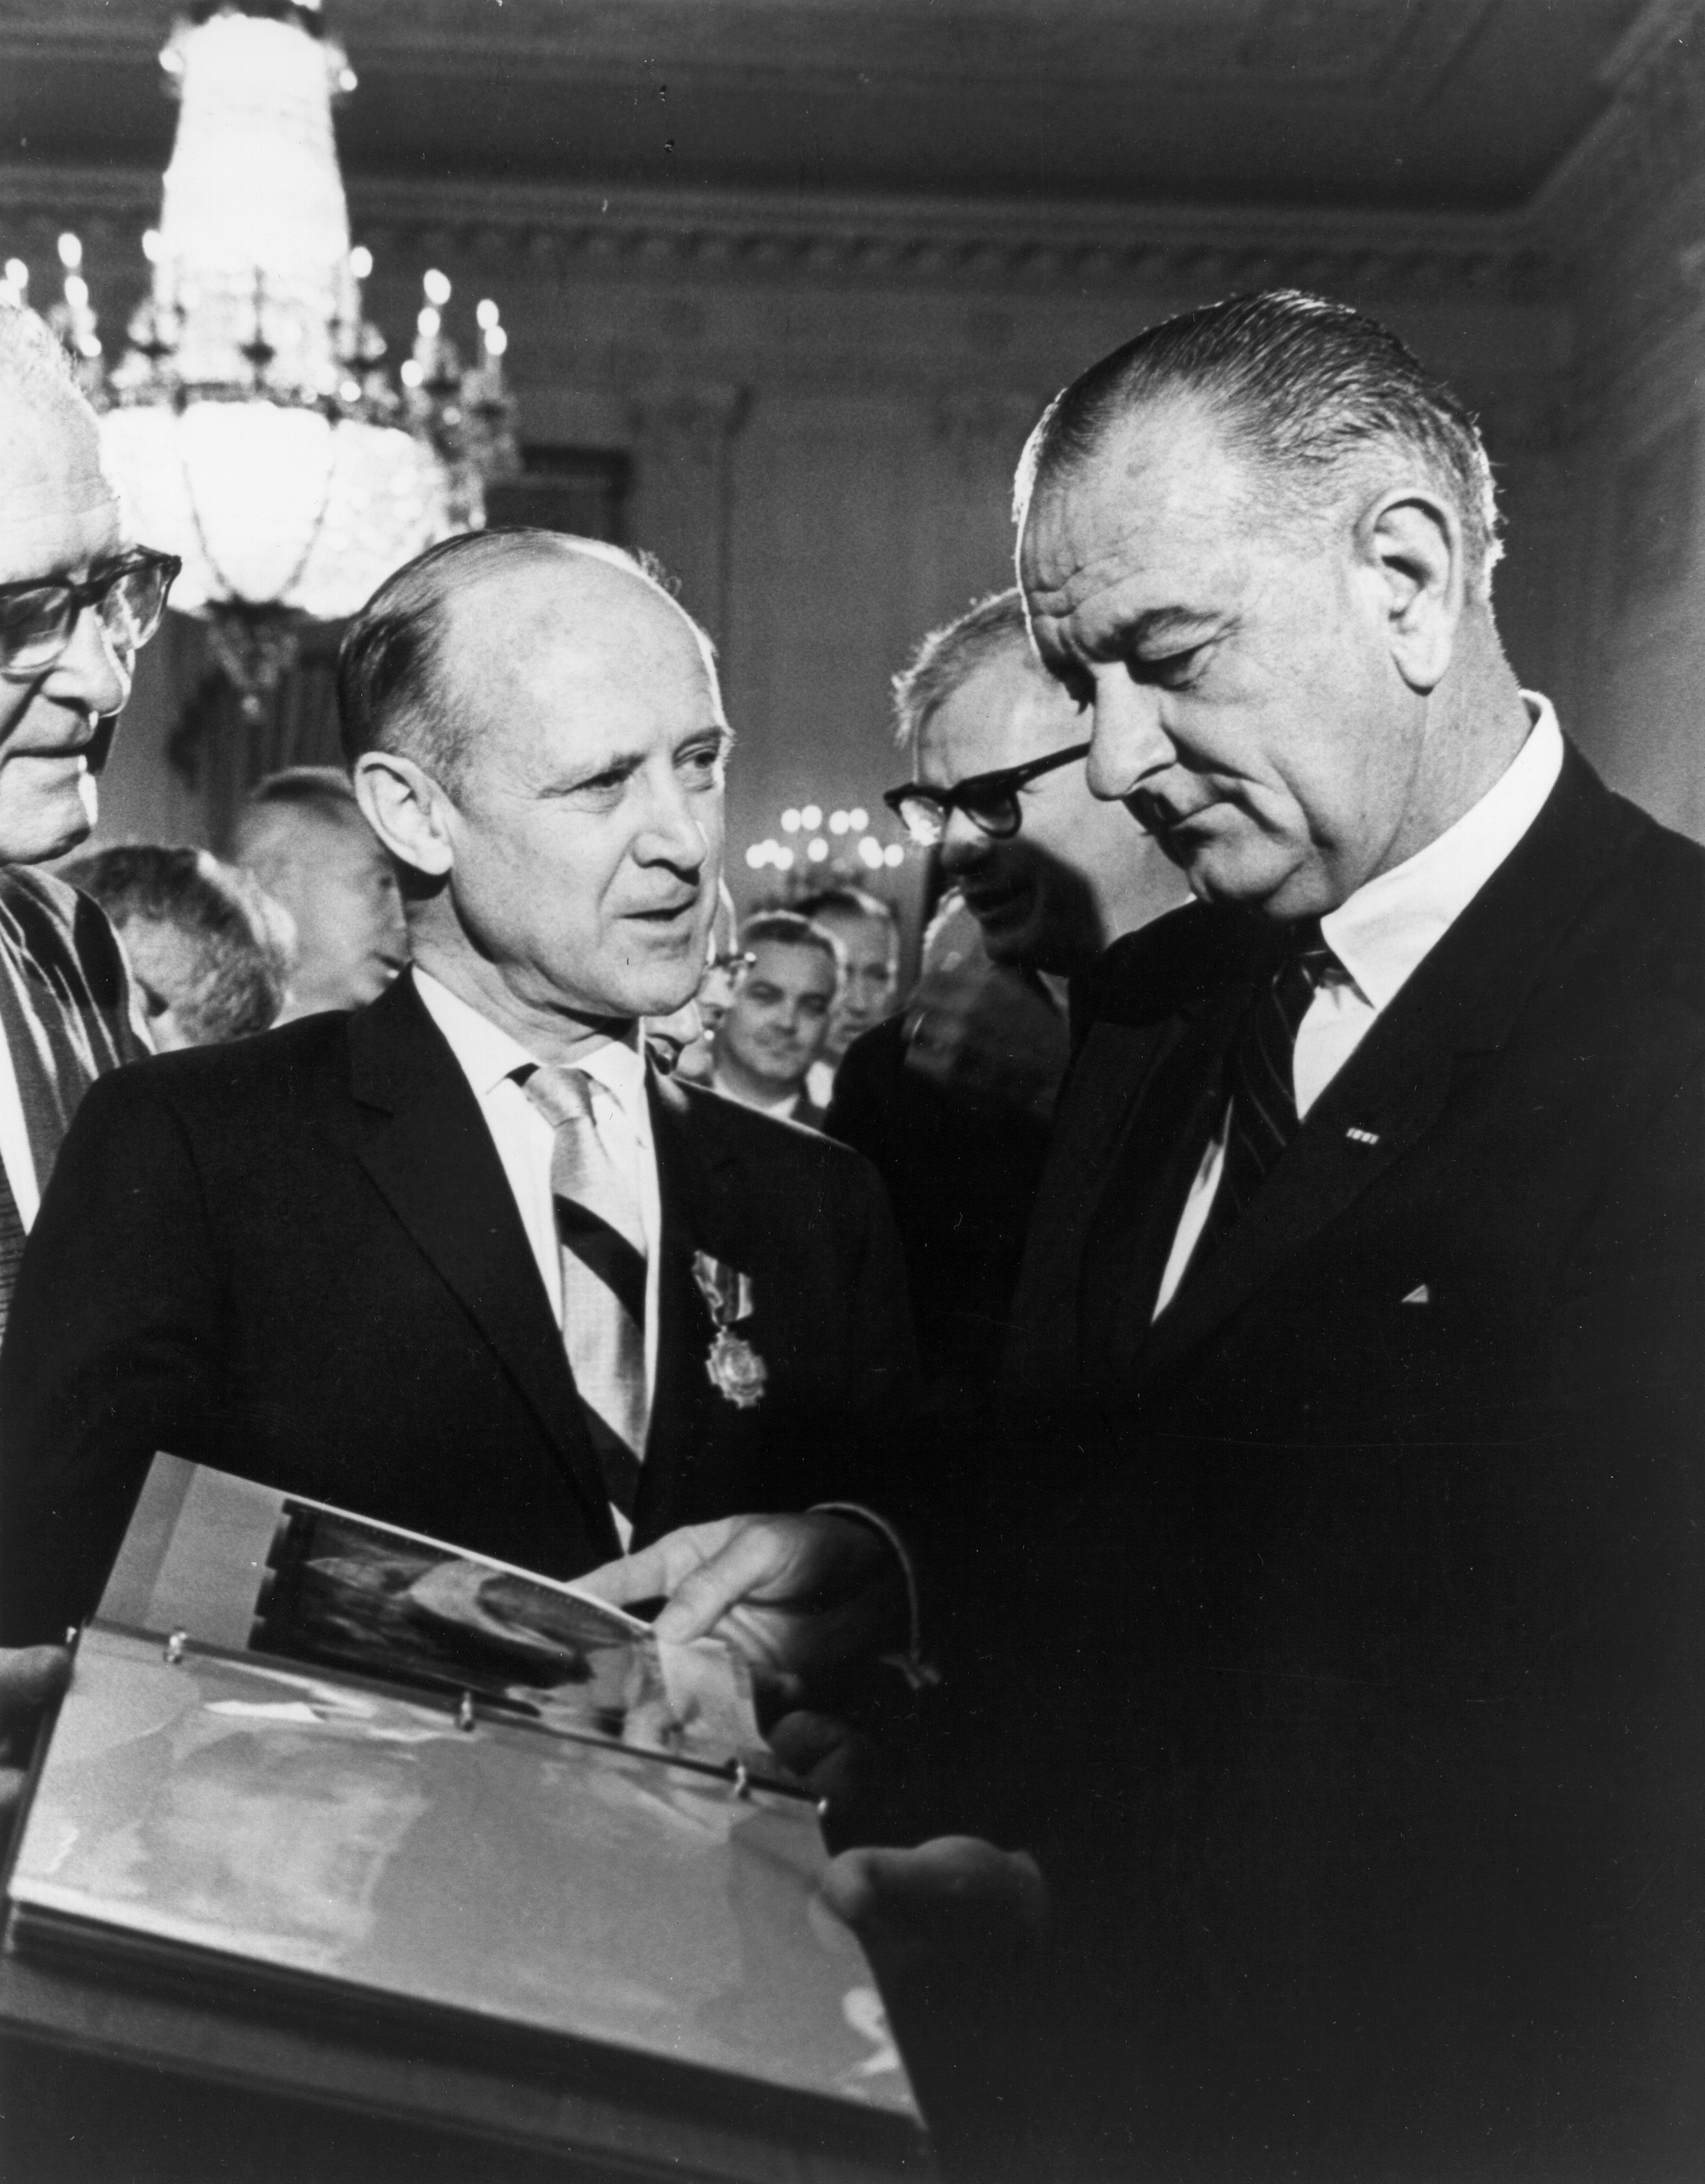 Mariner photos presented to President Johnson - GPN-2000-000480